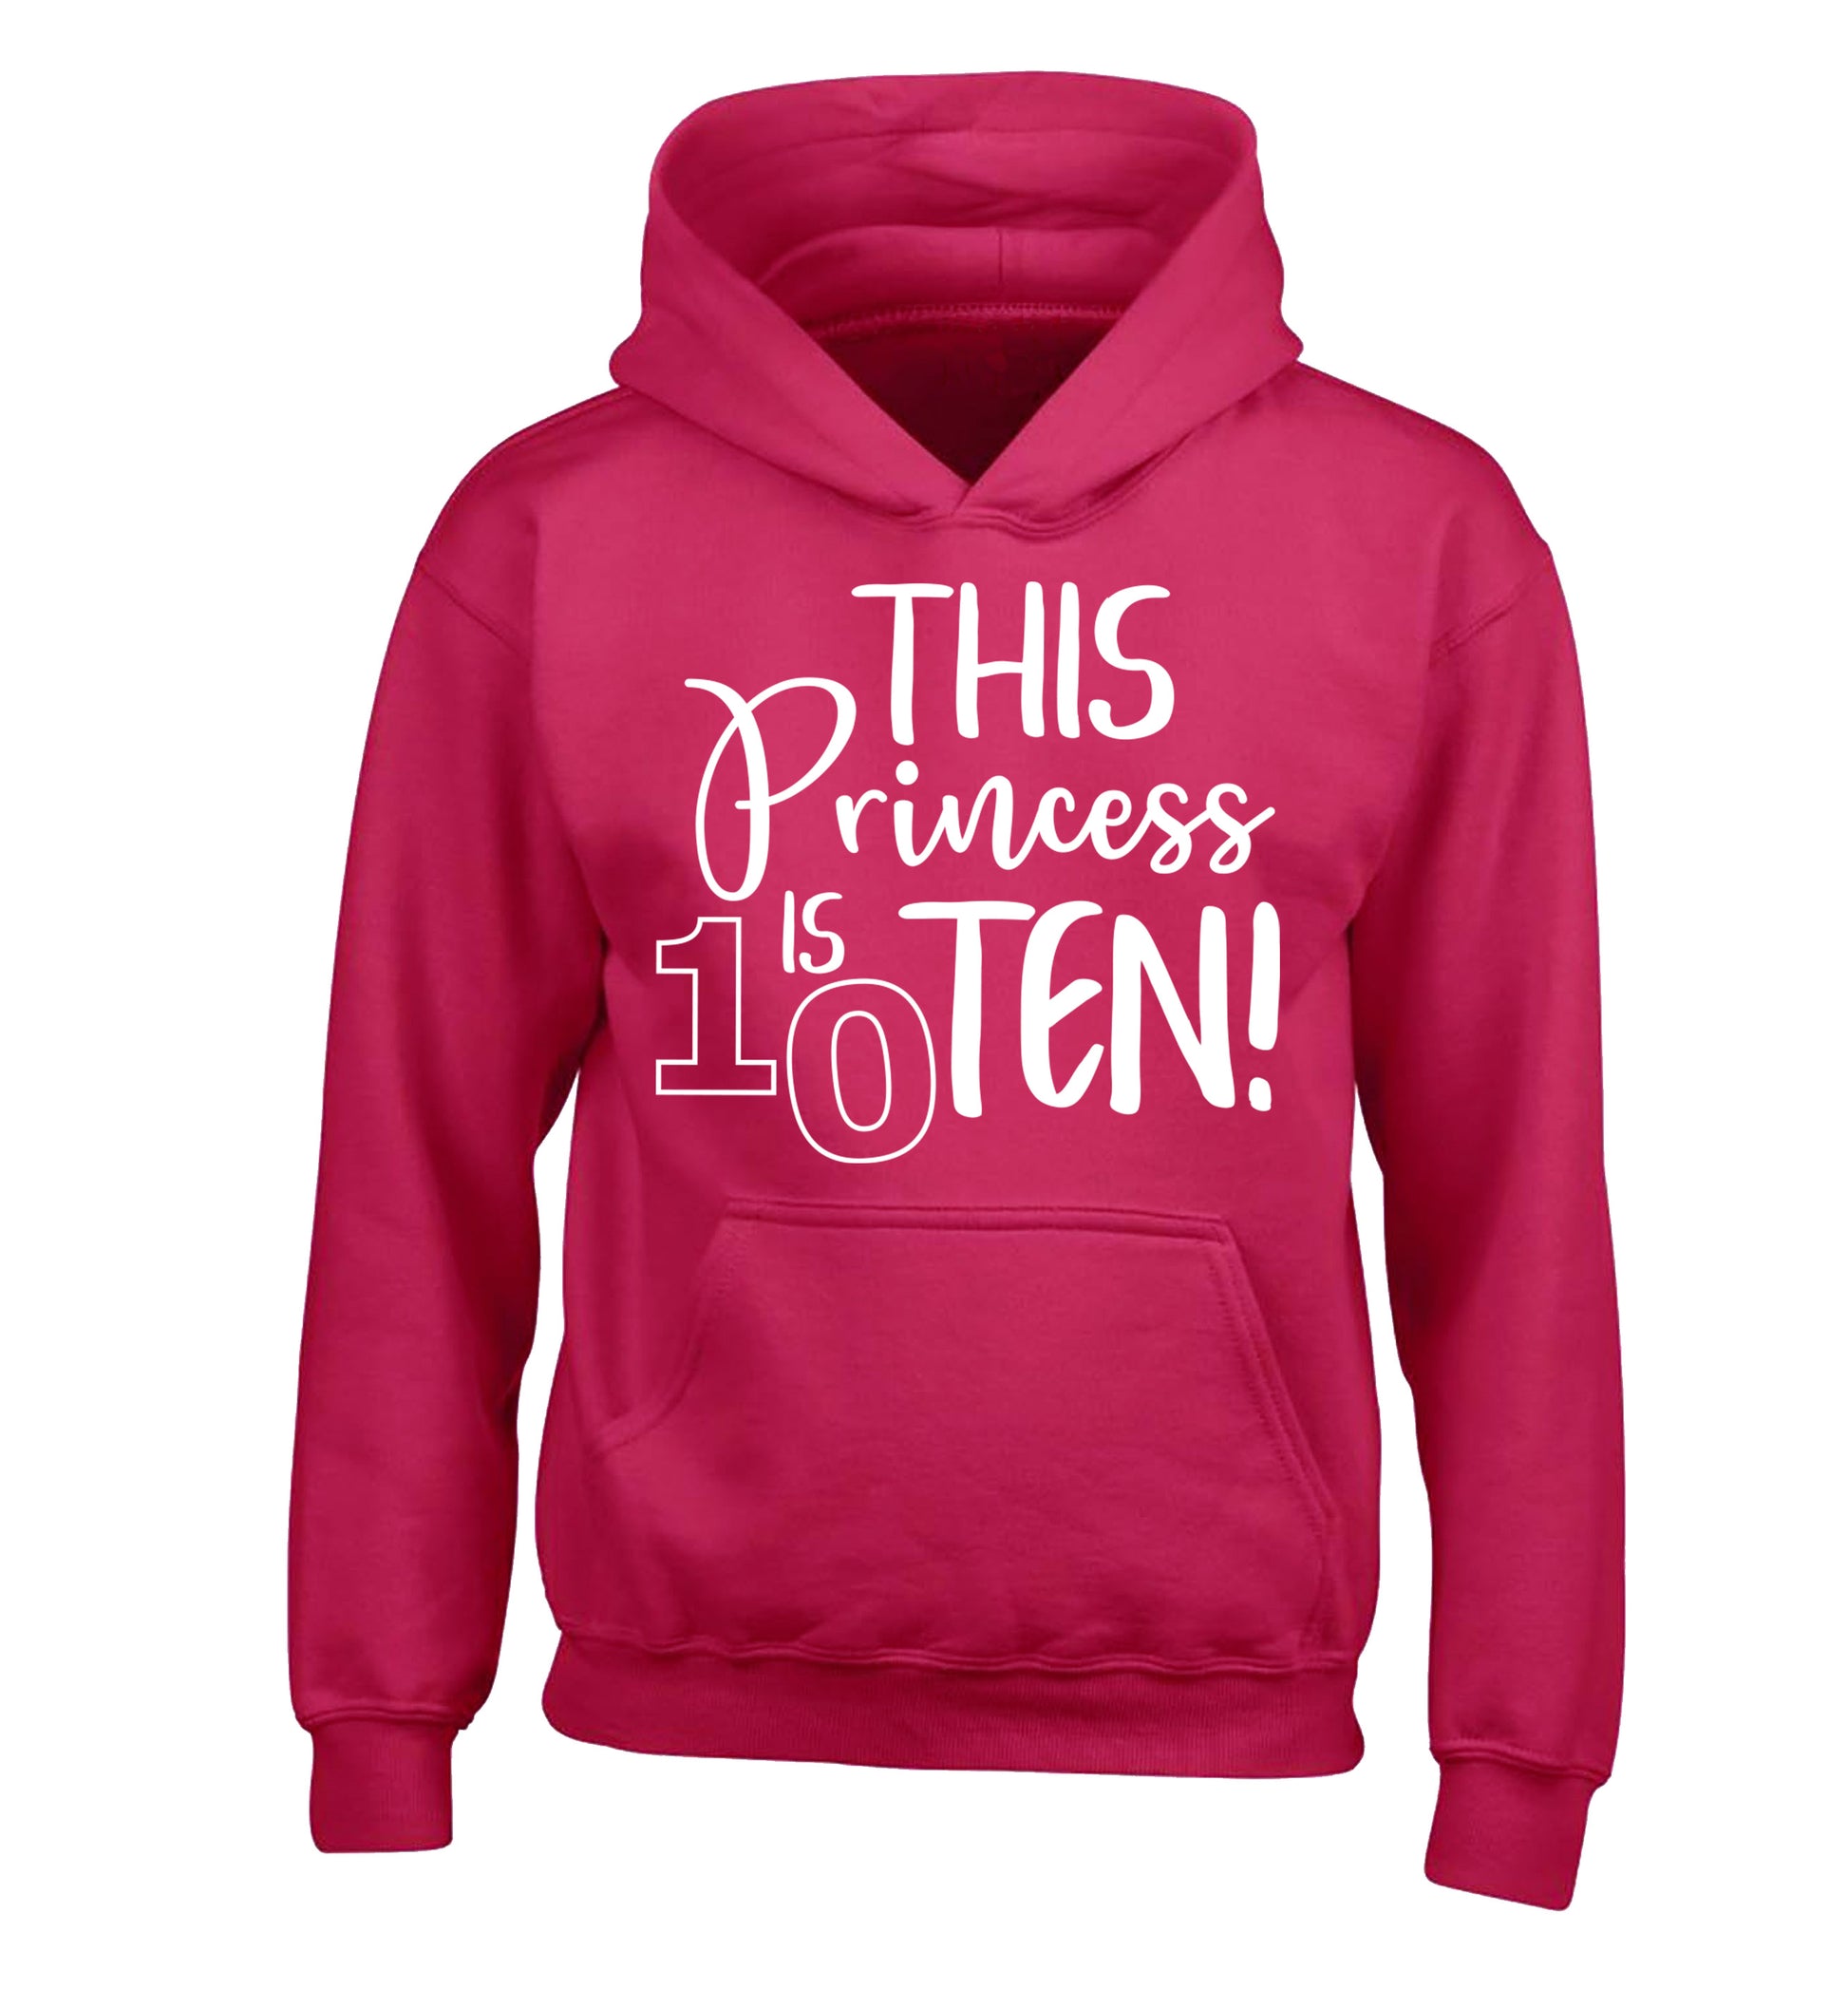 This princess is ten children's pink hoodie 12-13 Years